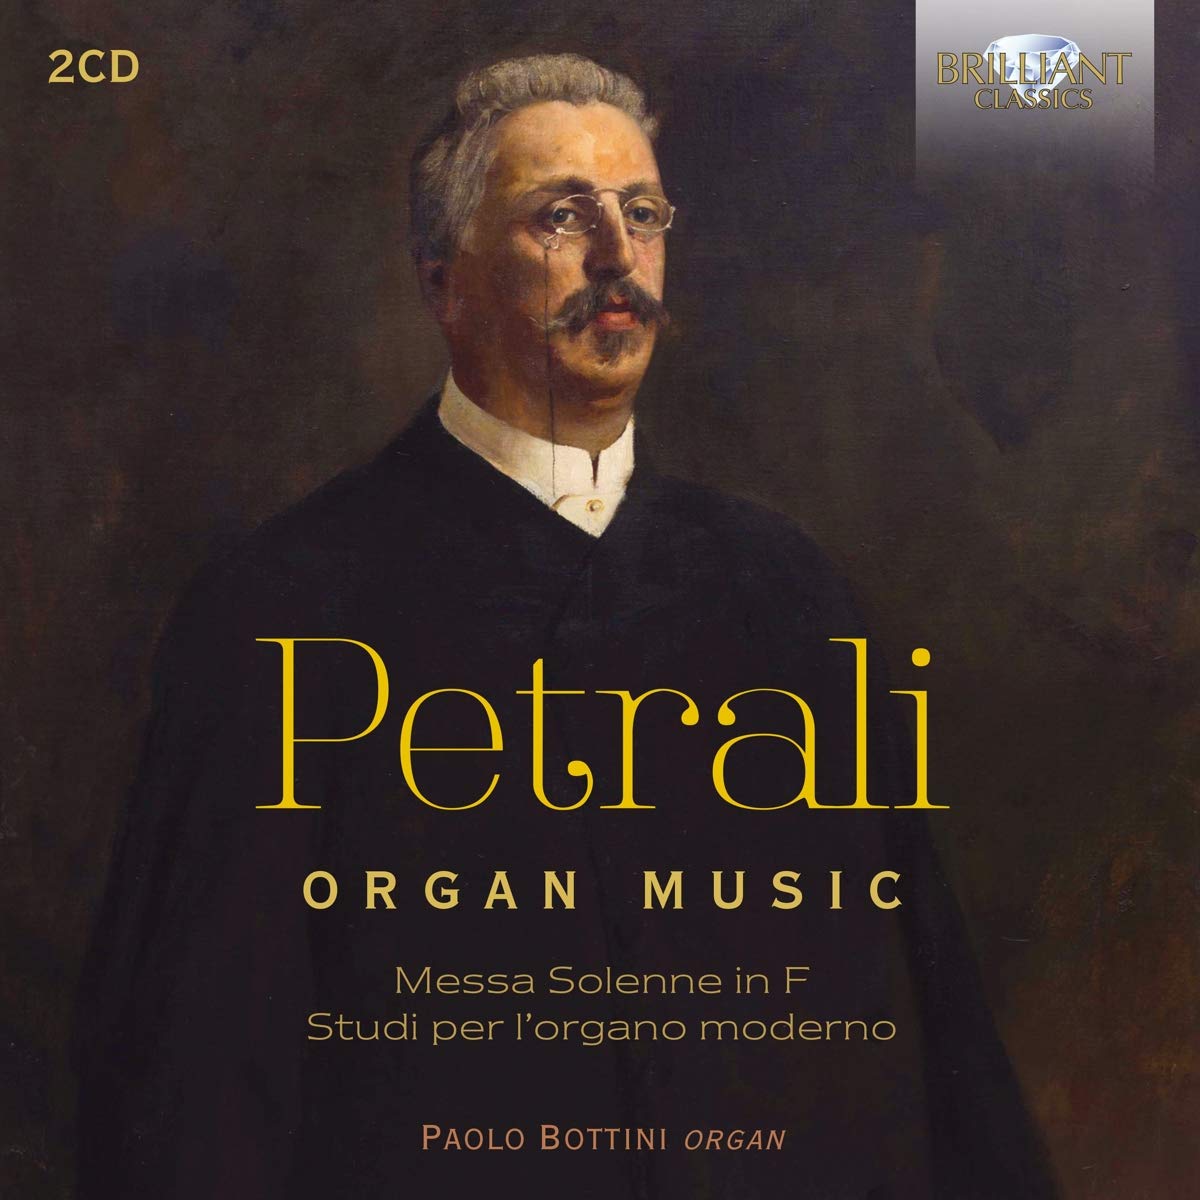 petrali organ music bottini compact disc brilliant